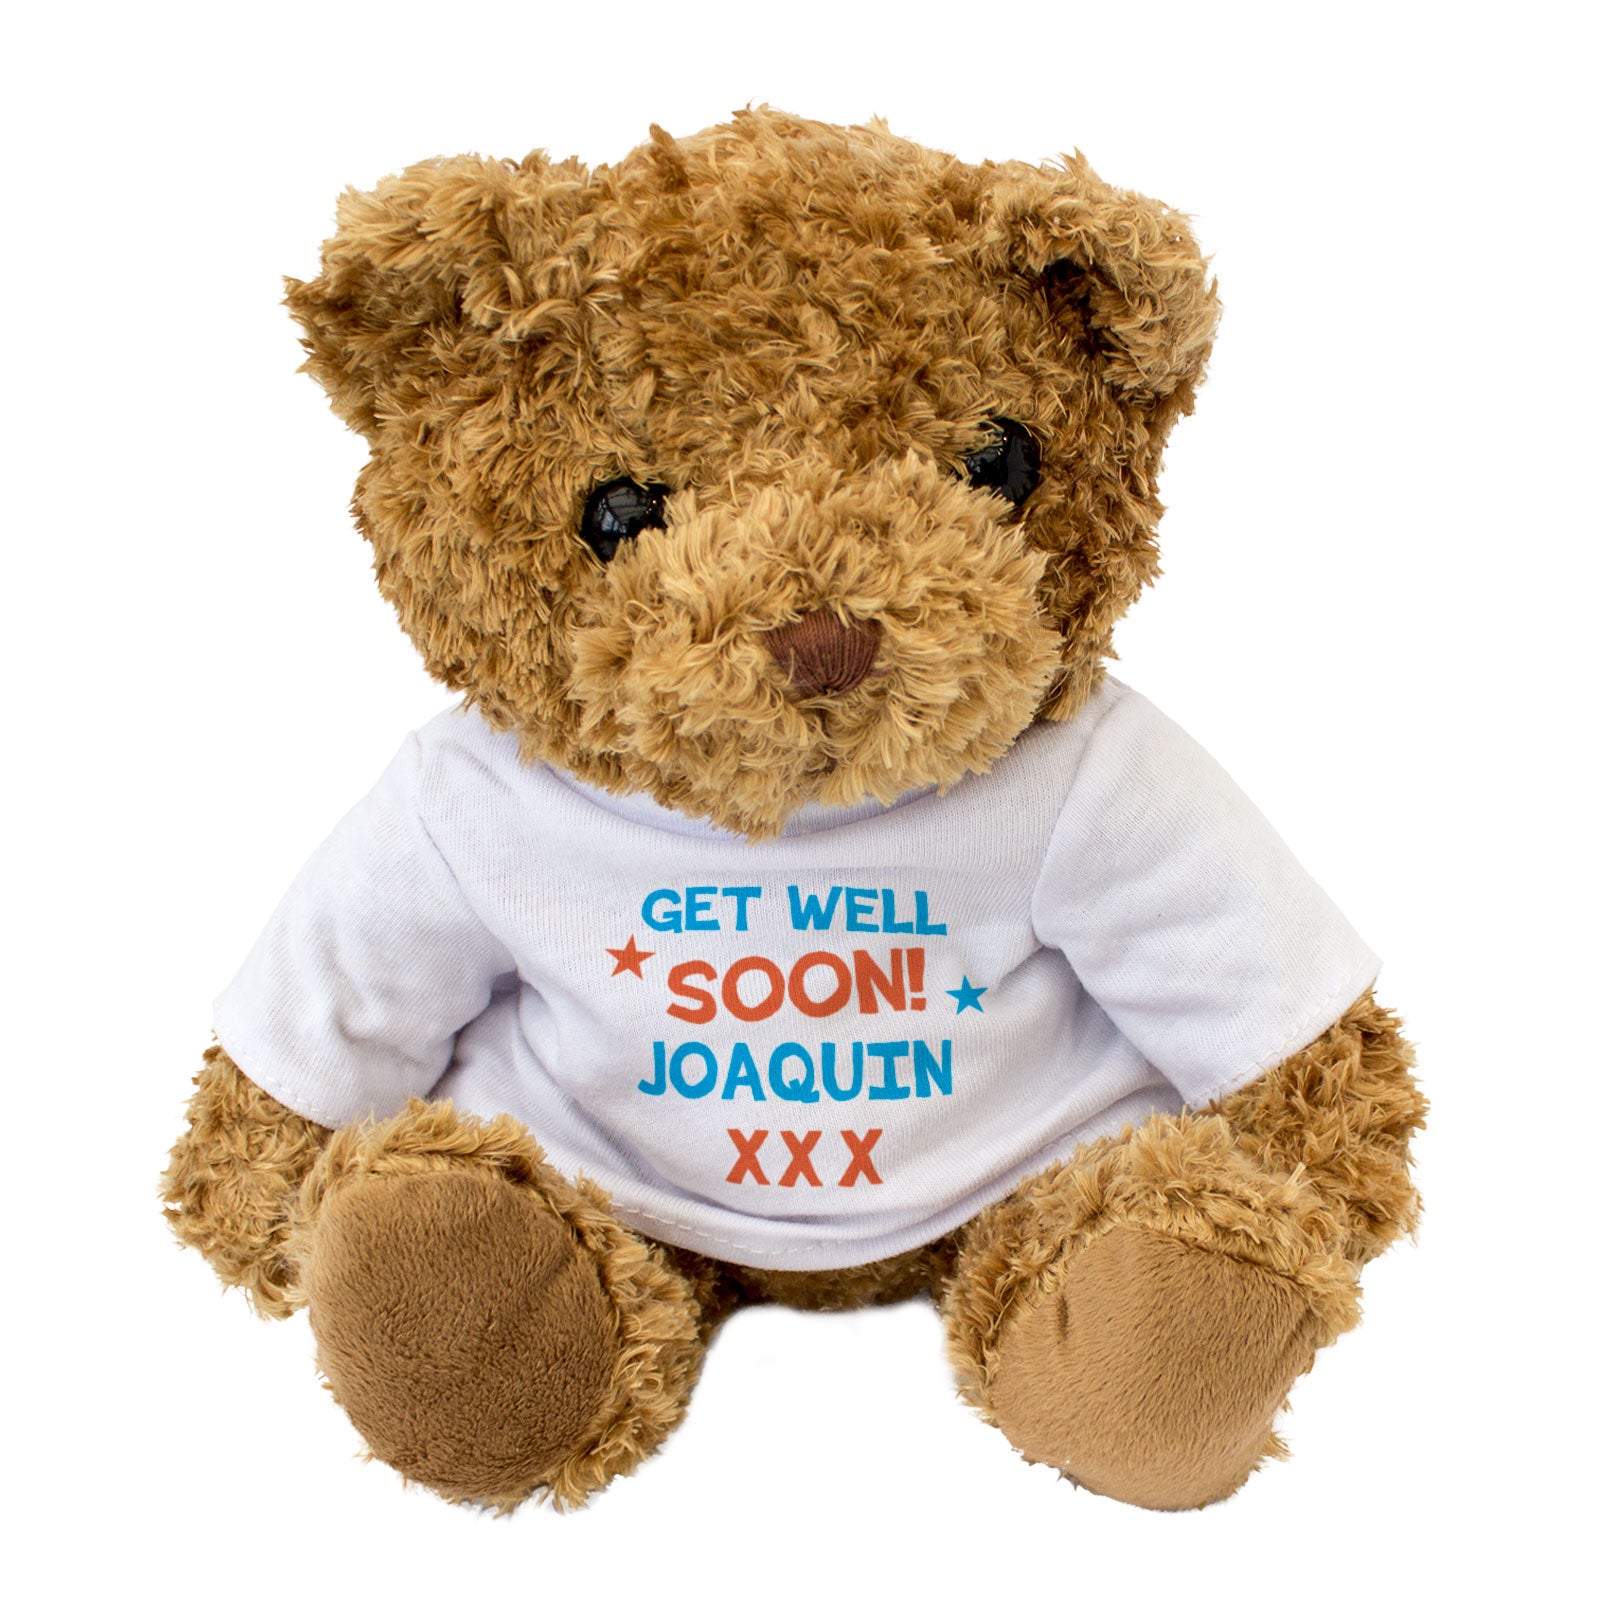 Get Well Soon Joaquin - Teddy Bear